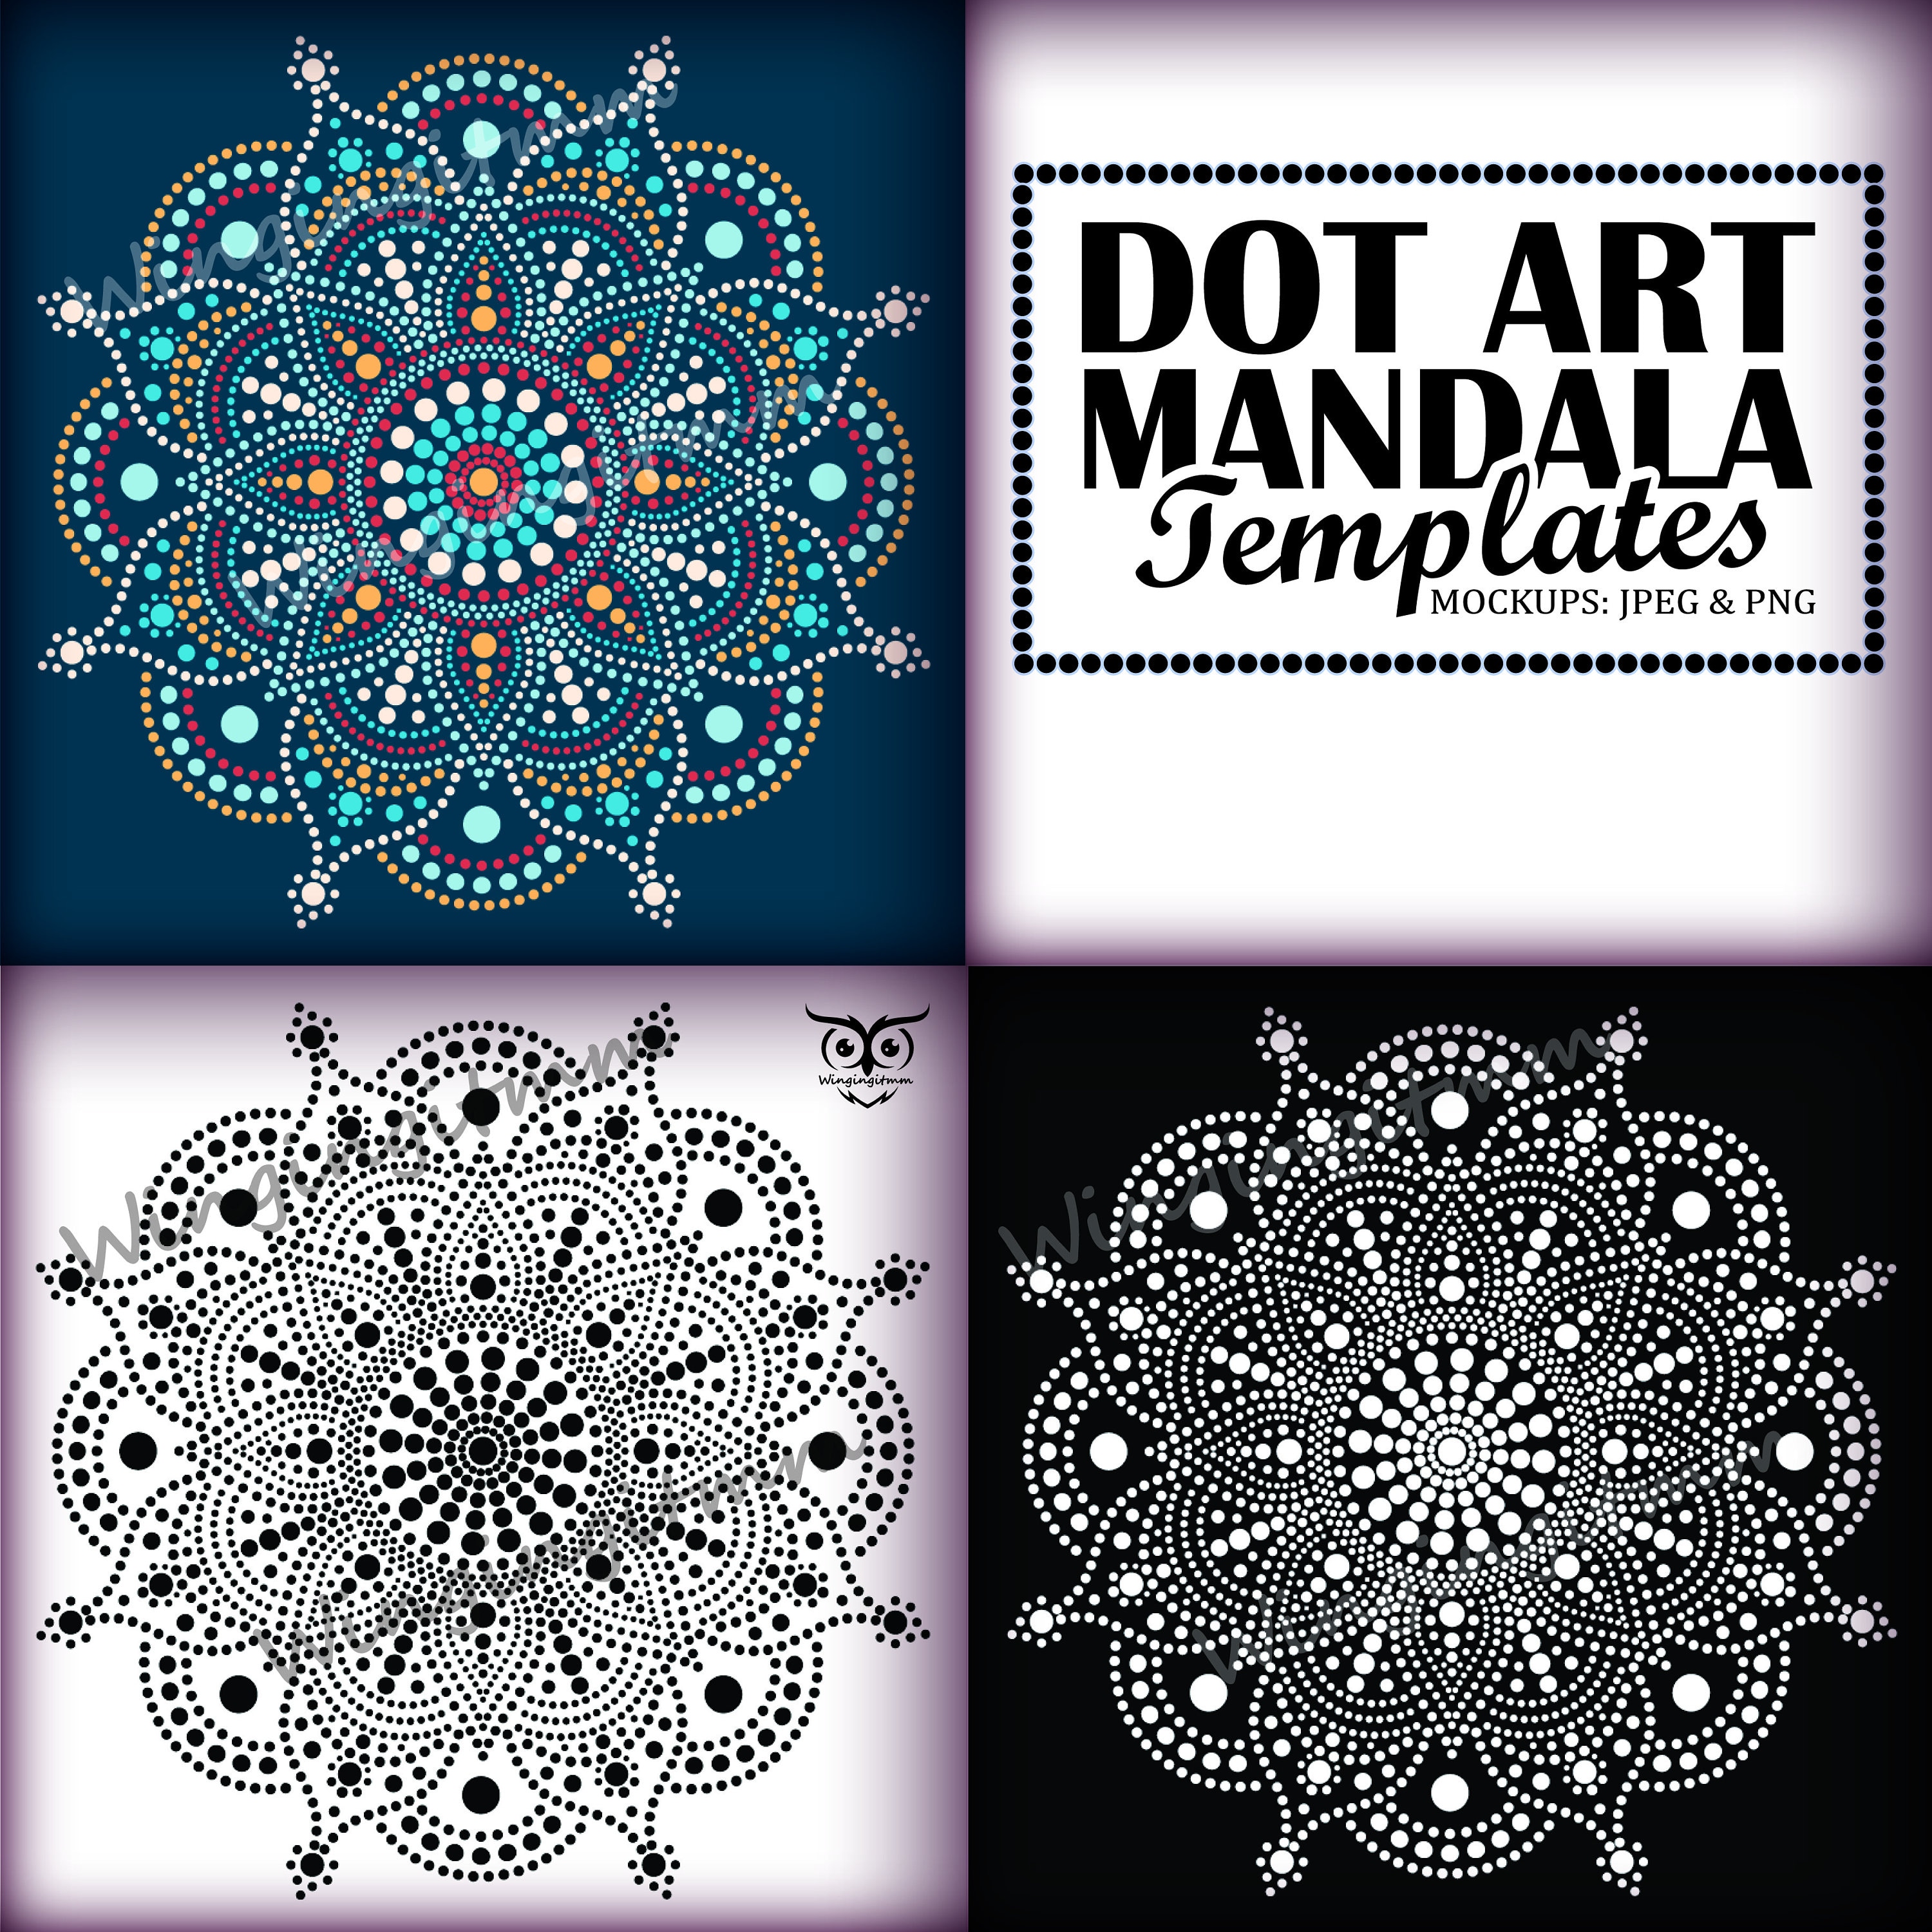 LOINFE Mandala Dot Painting Templates 24pcs Mandala Stencils